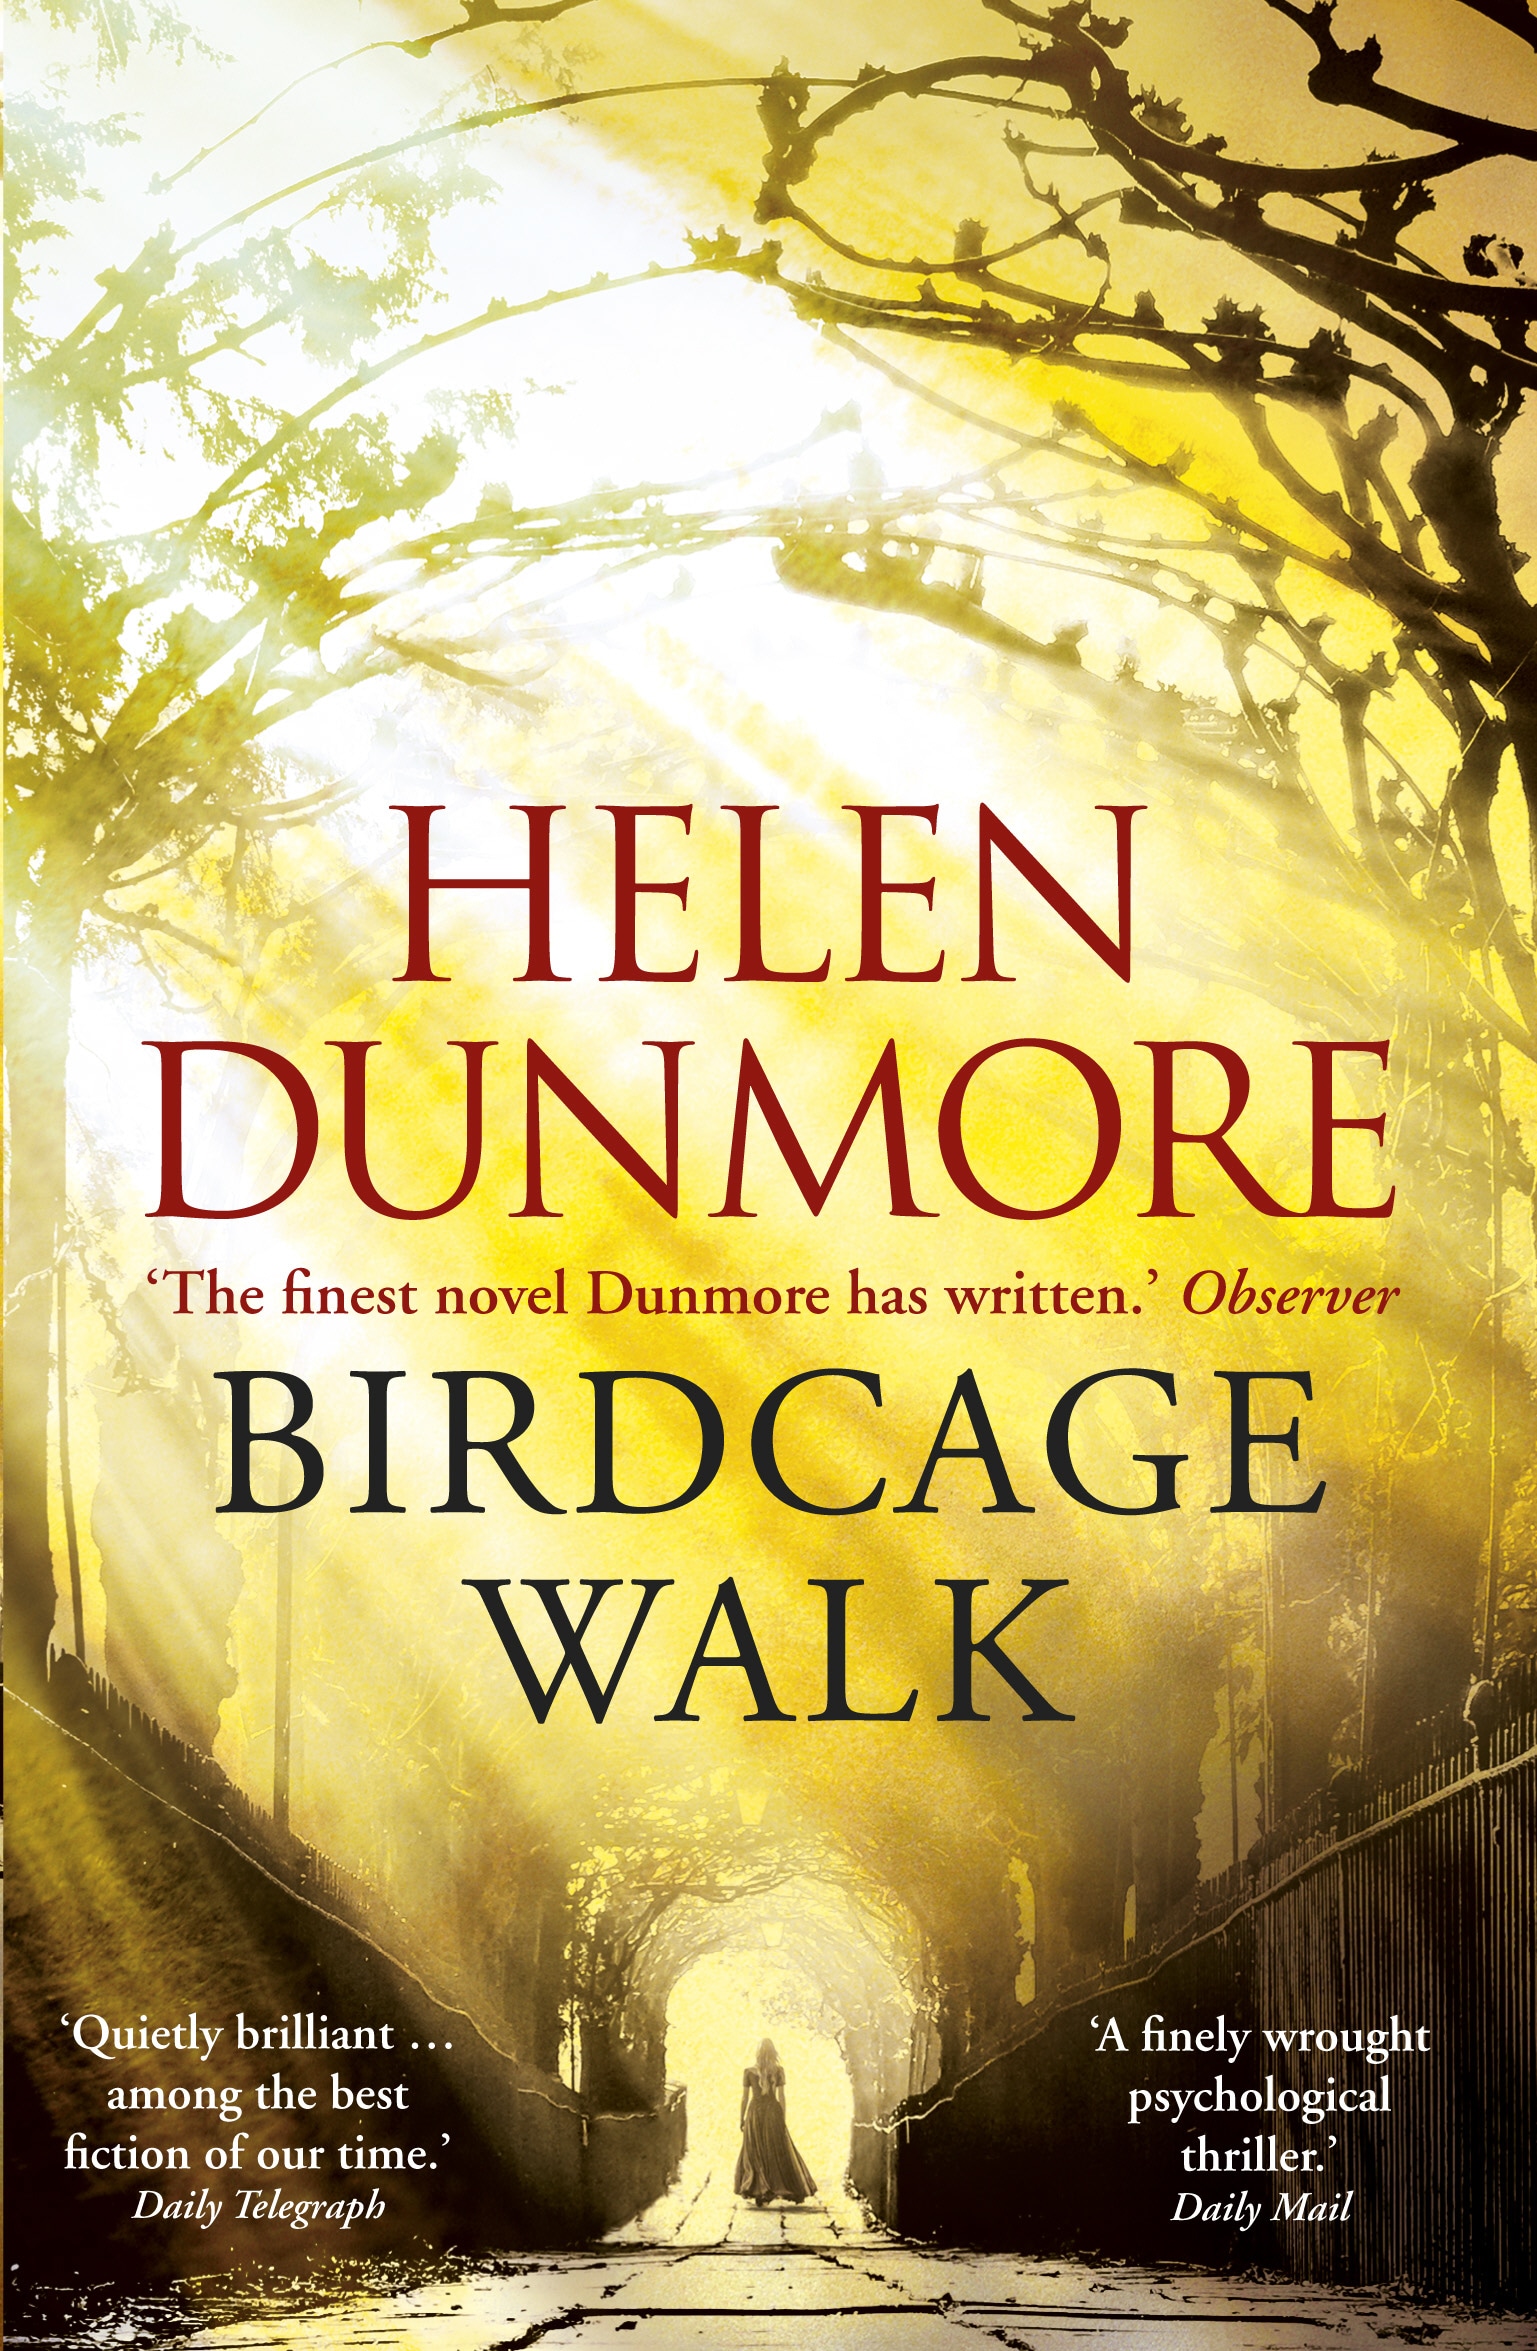 Book “Birdcage Walk” by Helen Dunmore — August 3, 2017